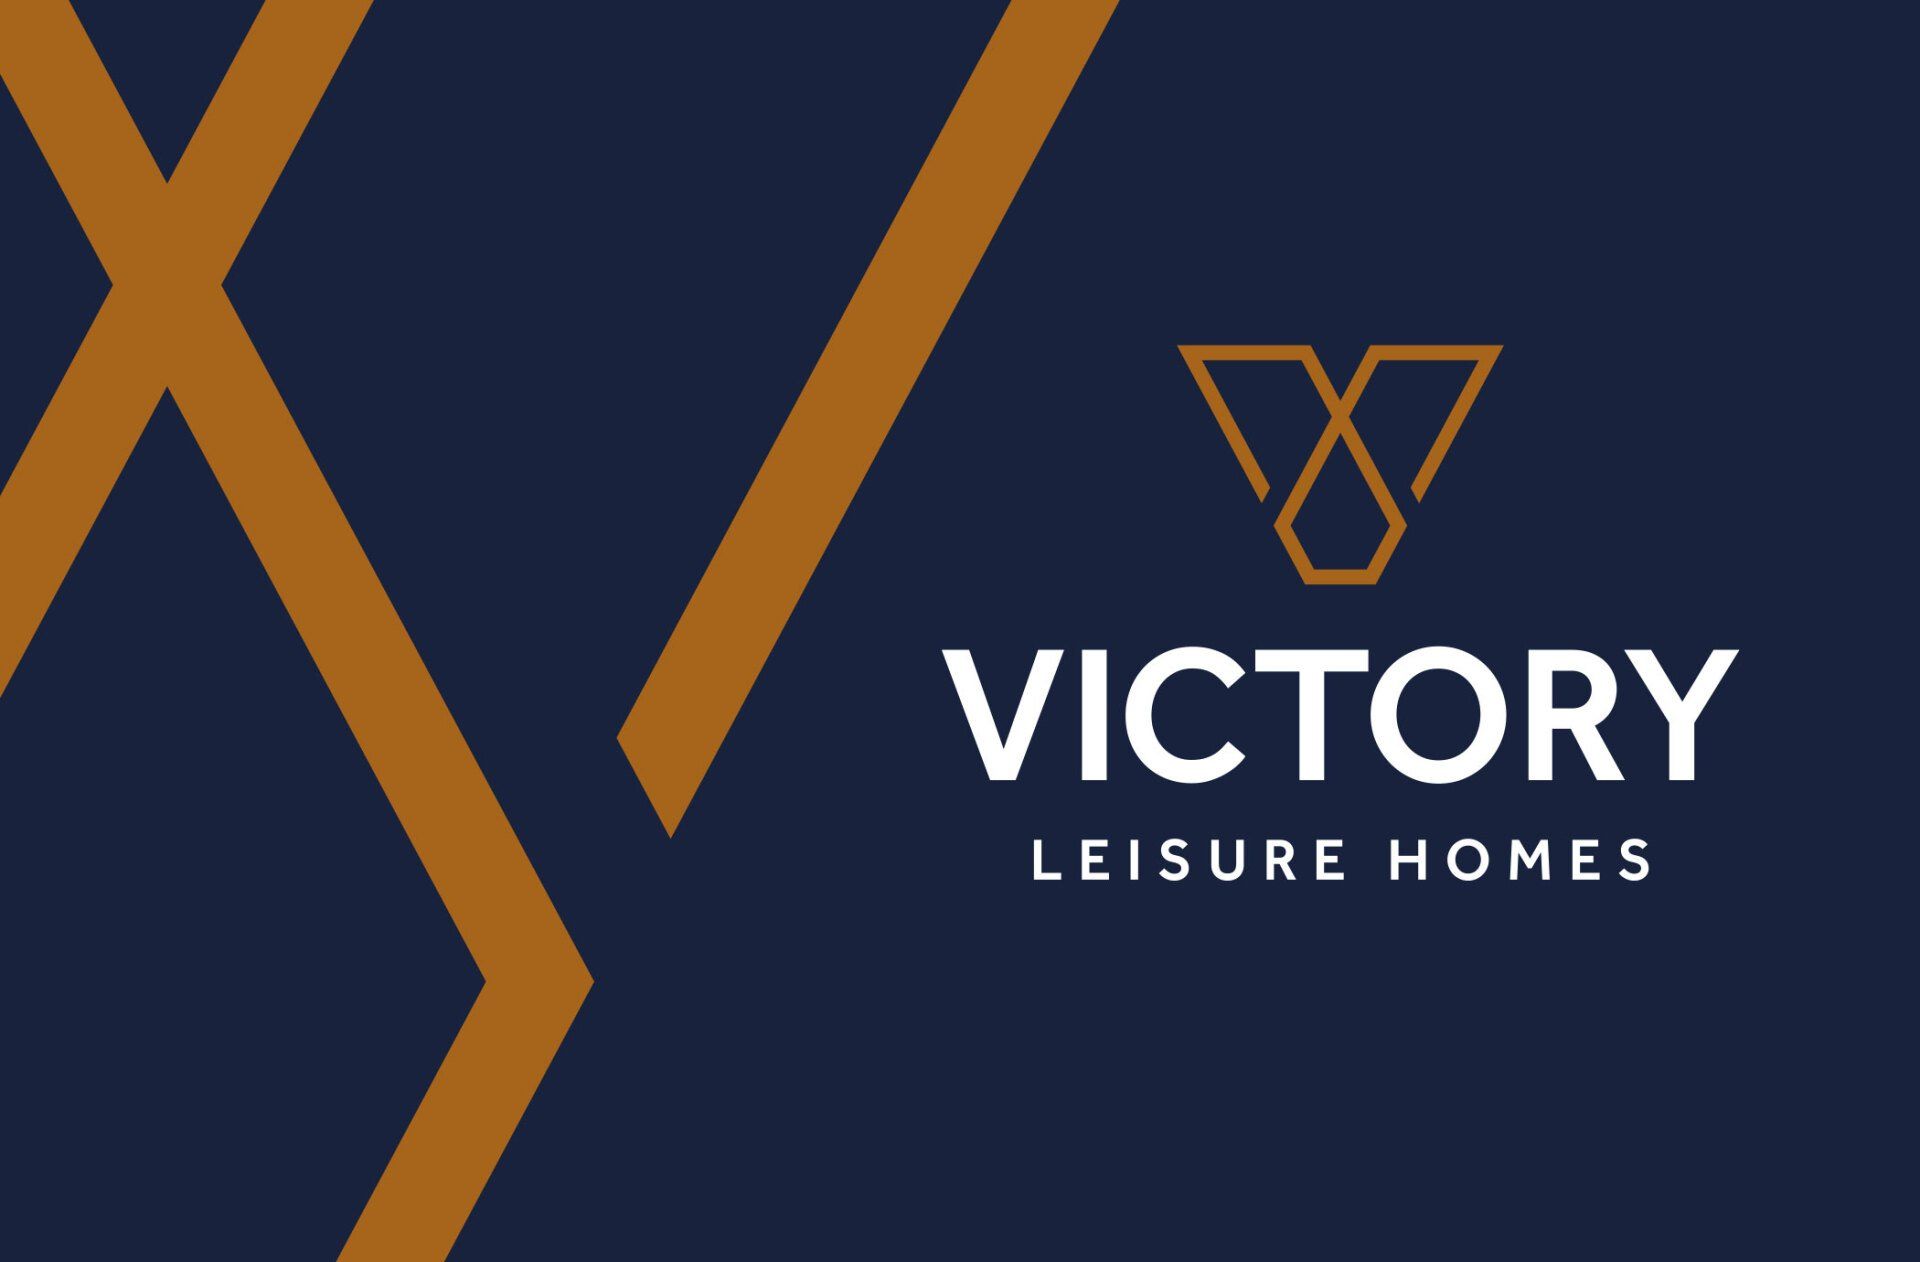 victory leisure homes logo